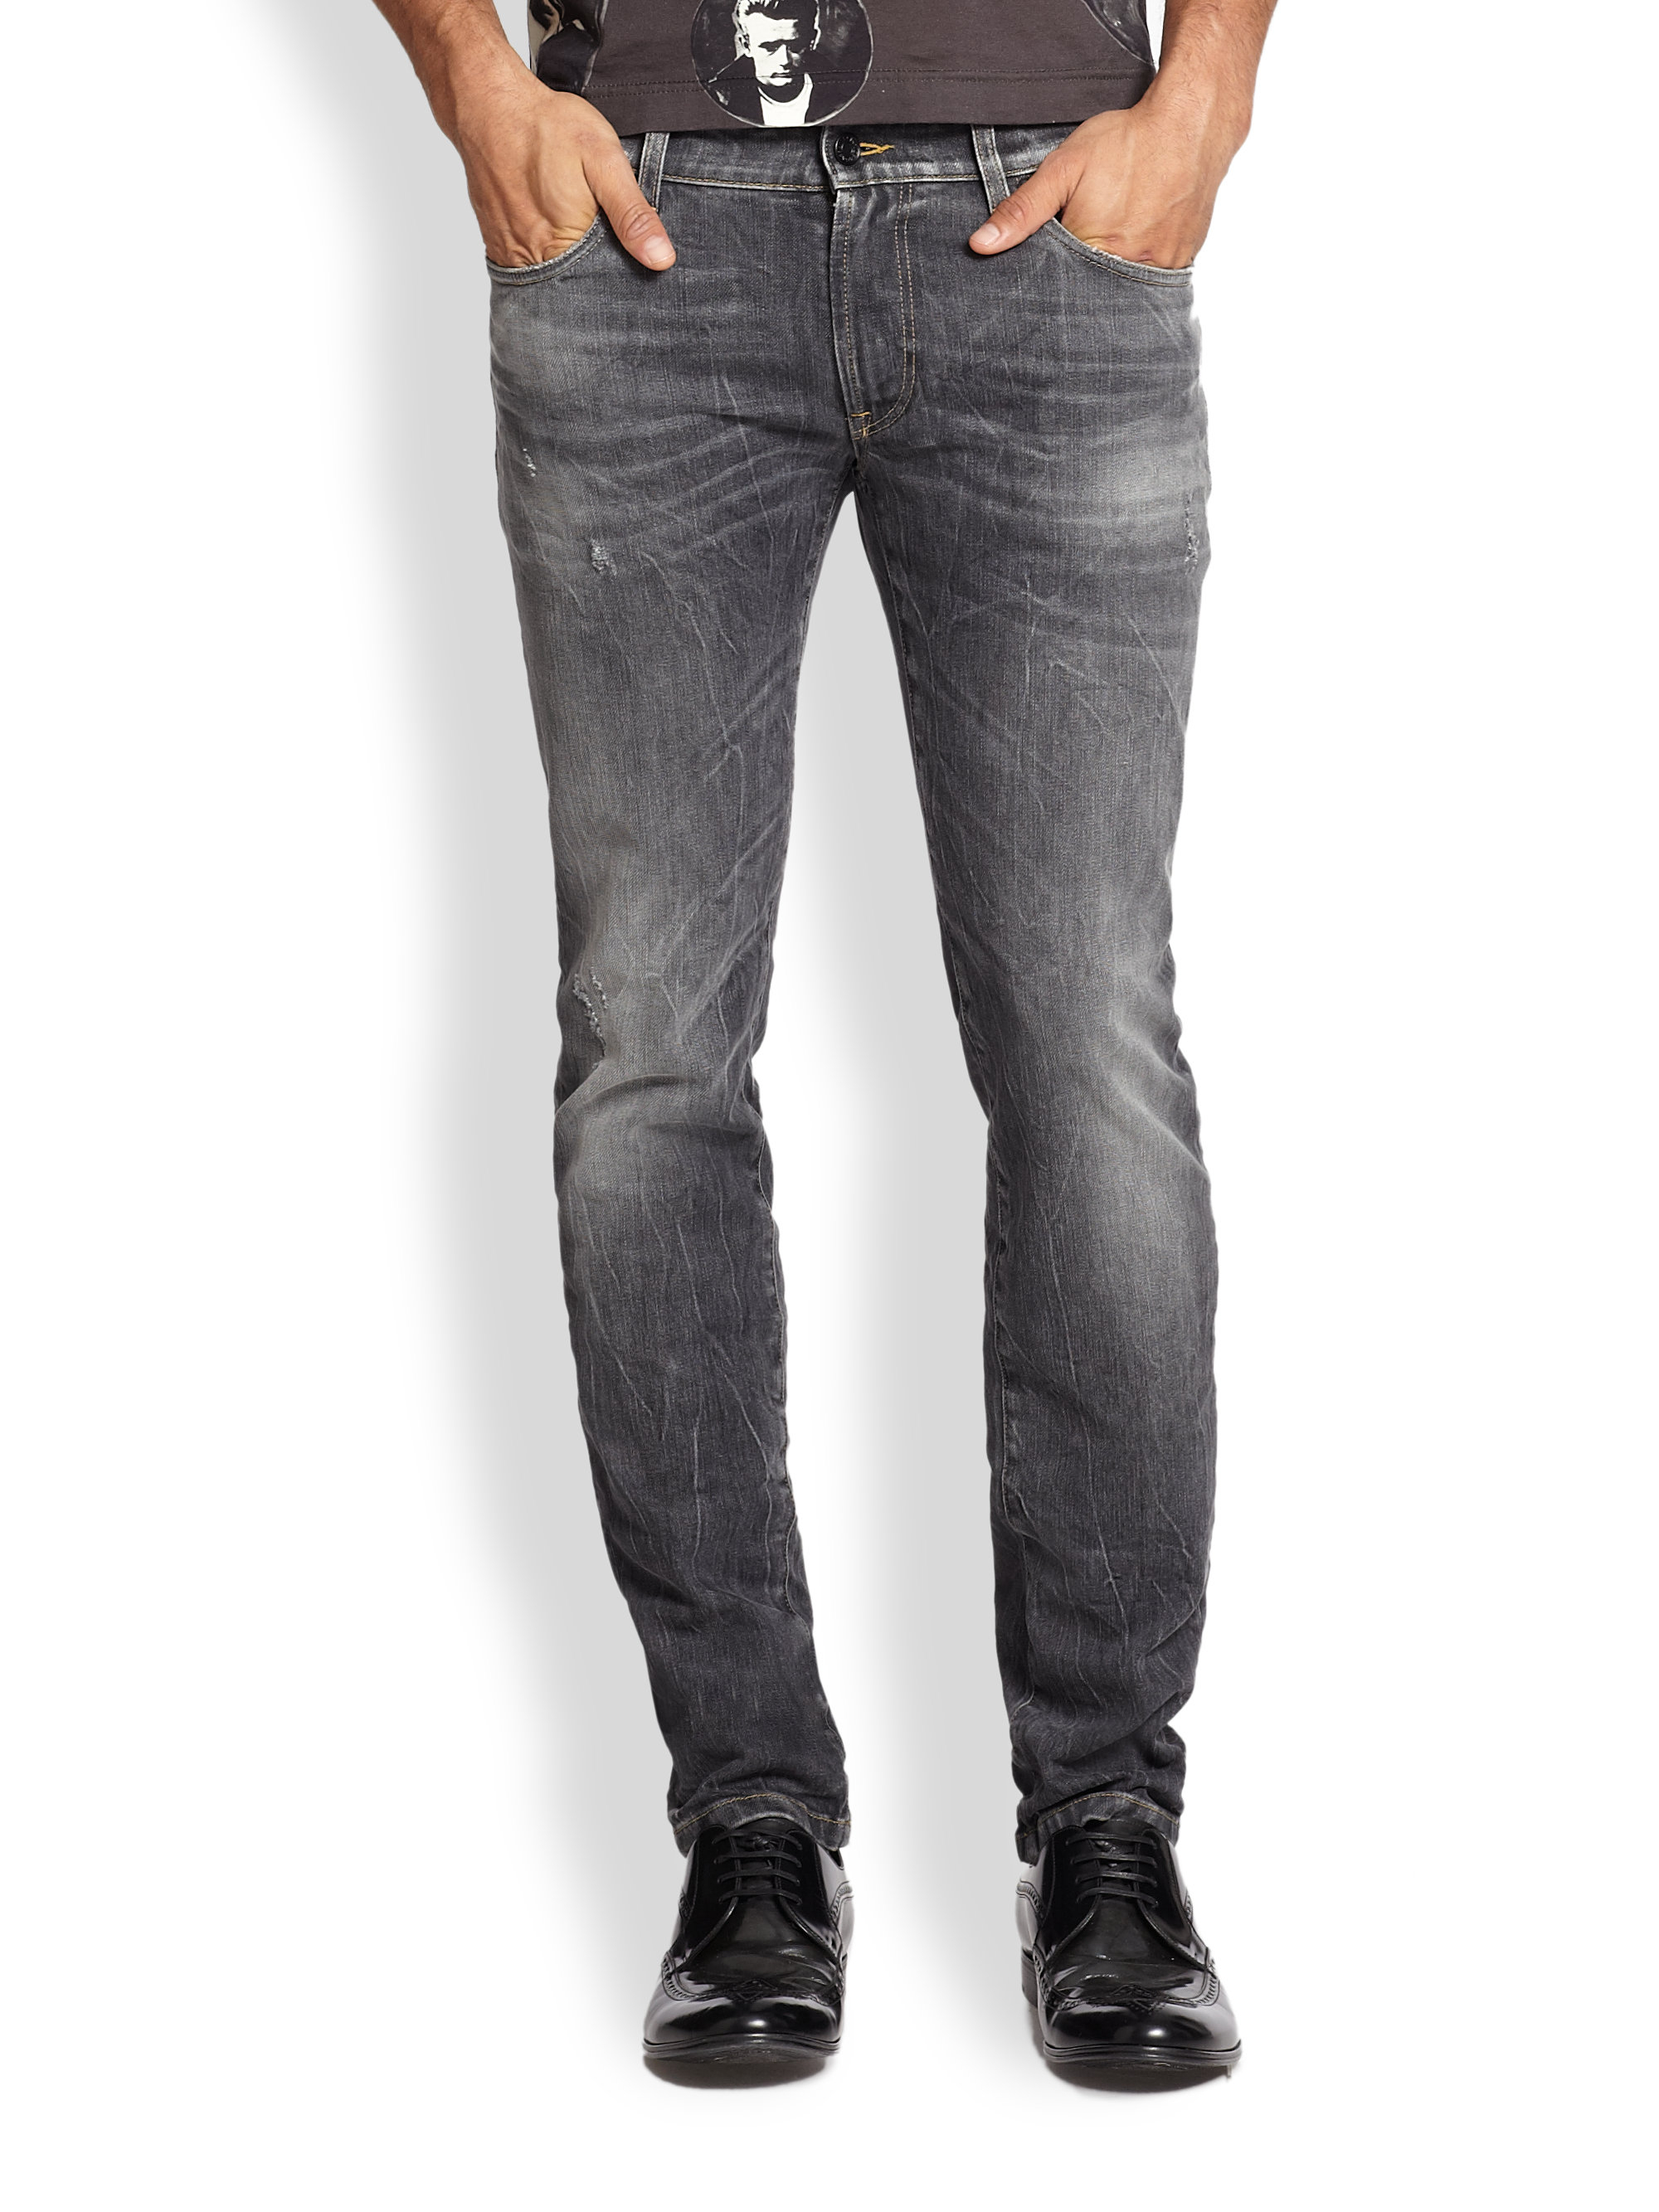 Lyst - Dolce & Gabbana Sandblasted Stretch Denim Jeans in Gray for Men